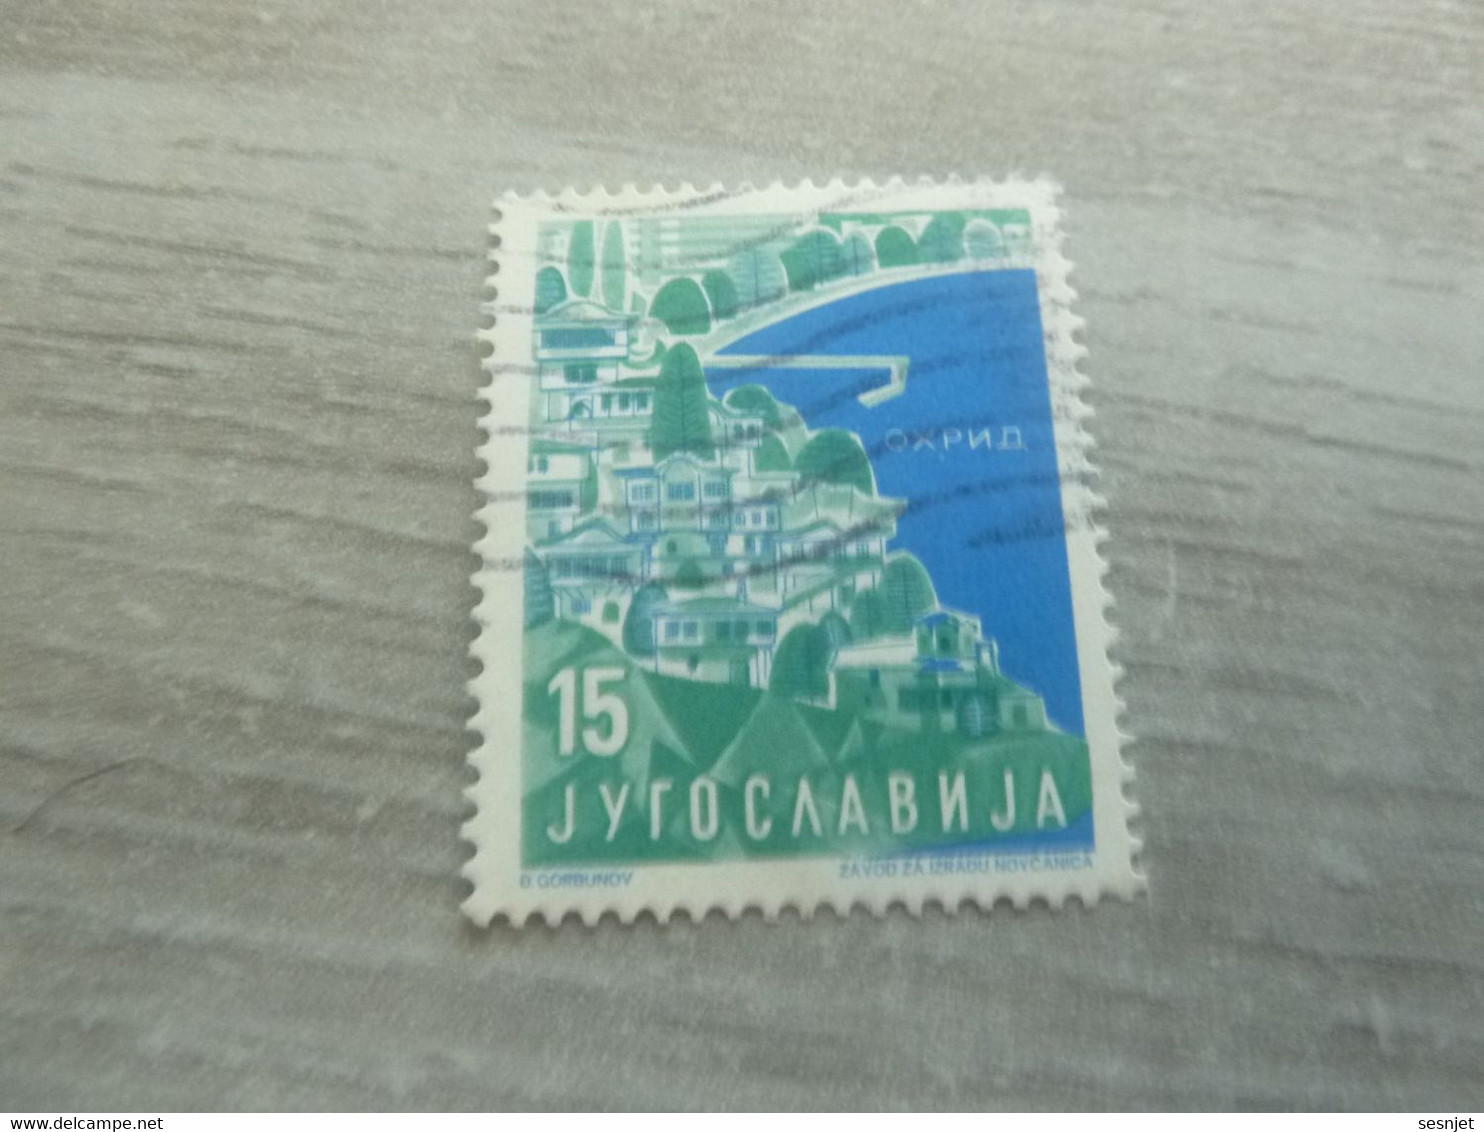 Jyrocaabnja - Oxpno - Corbunov - Val 15 - Gris, Bleu Et Vert - Oblitéré - - Gebraucht